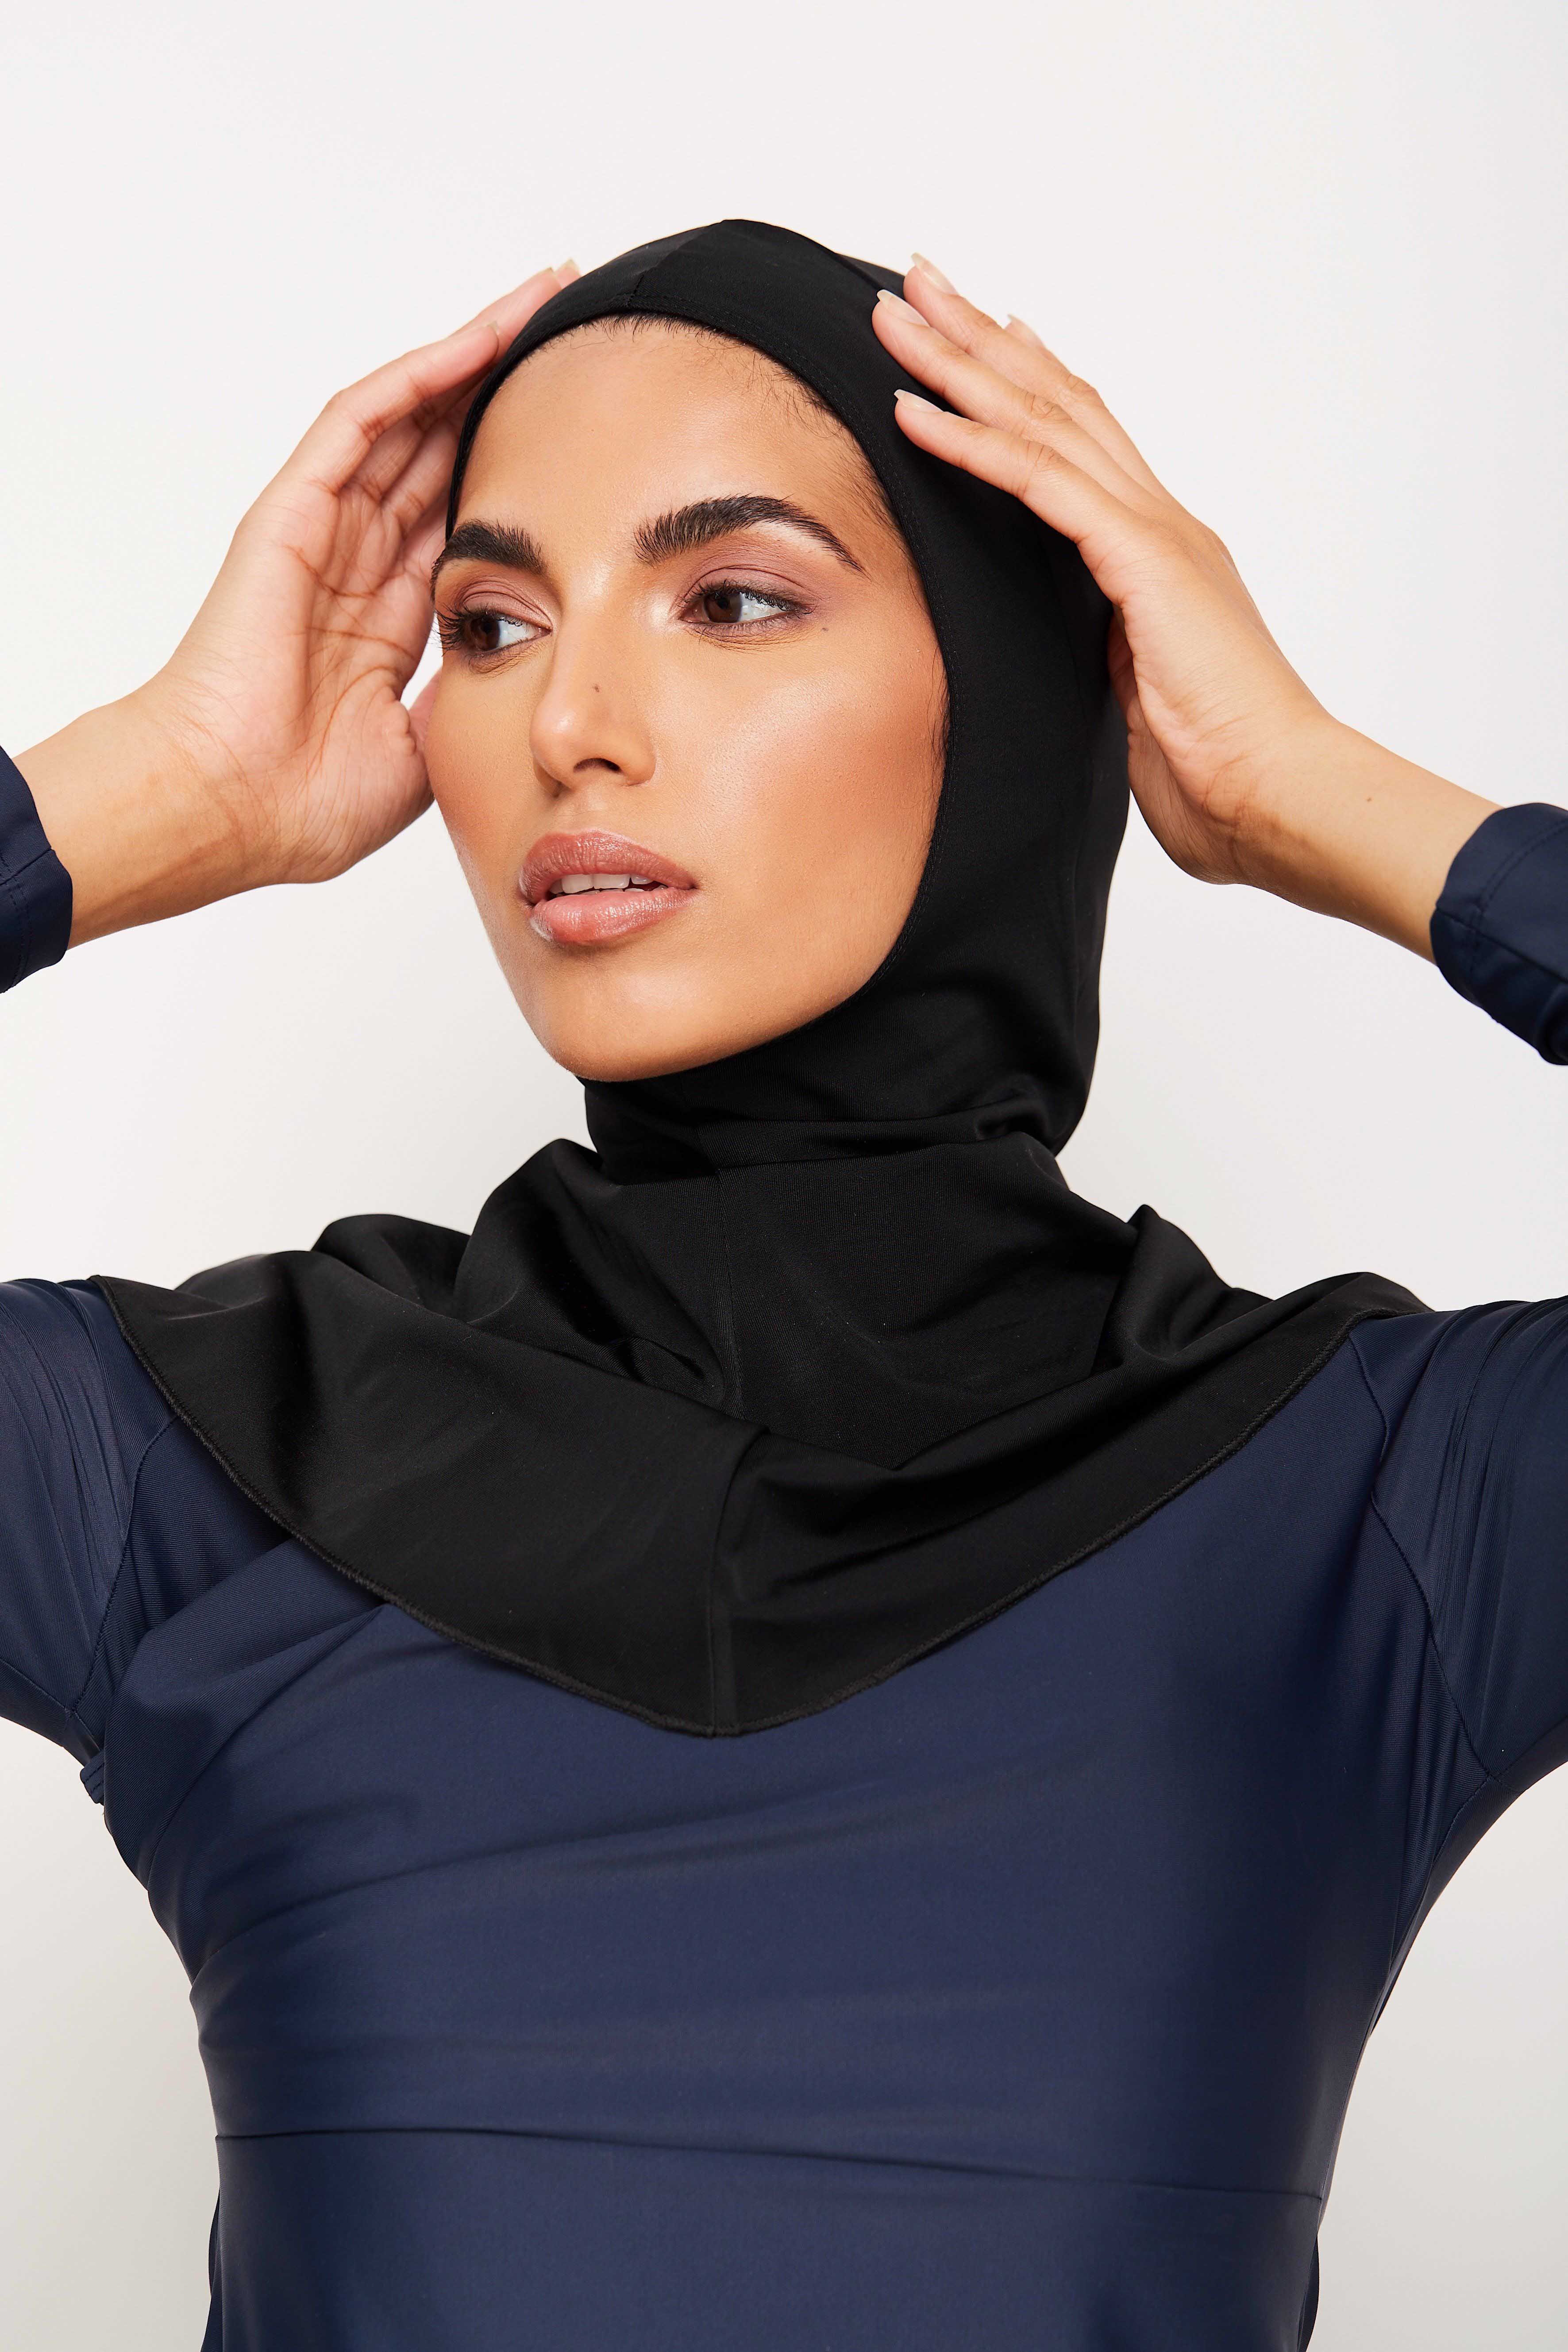 Solid Color  Muslim Turban Cap For Women Full Cover Swim Hijab Islamic Women Modest Hijab